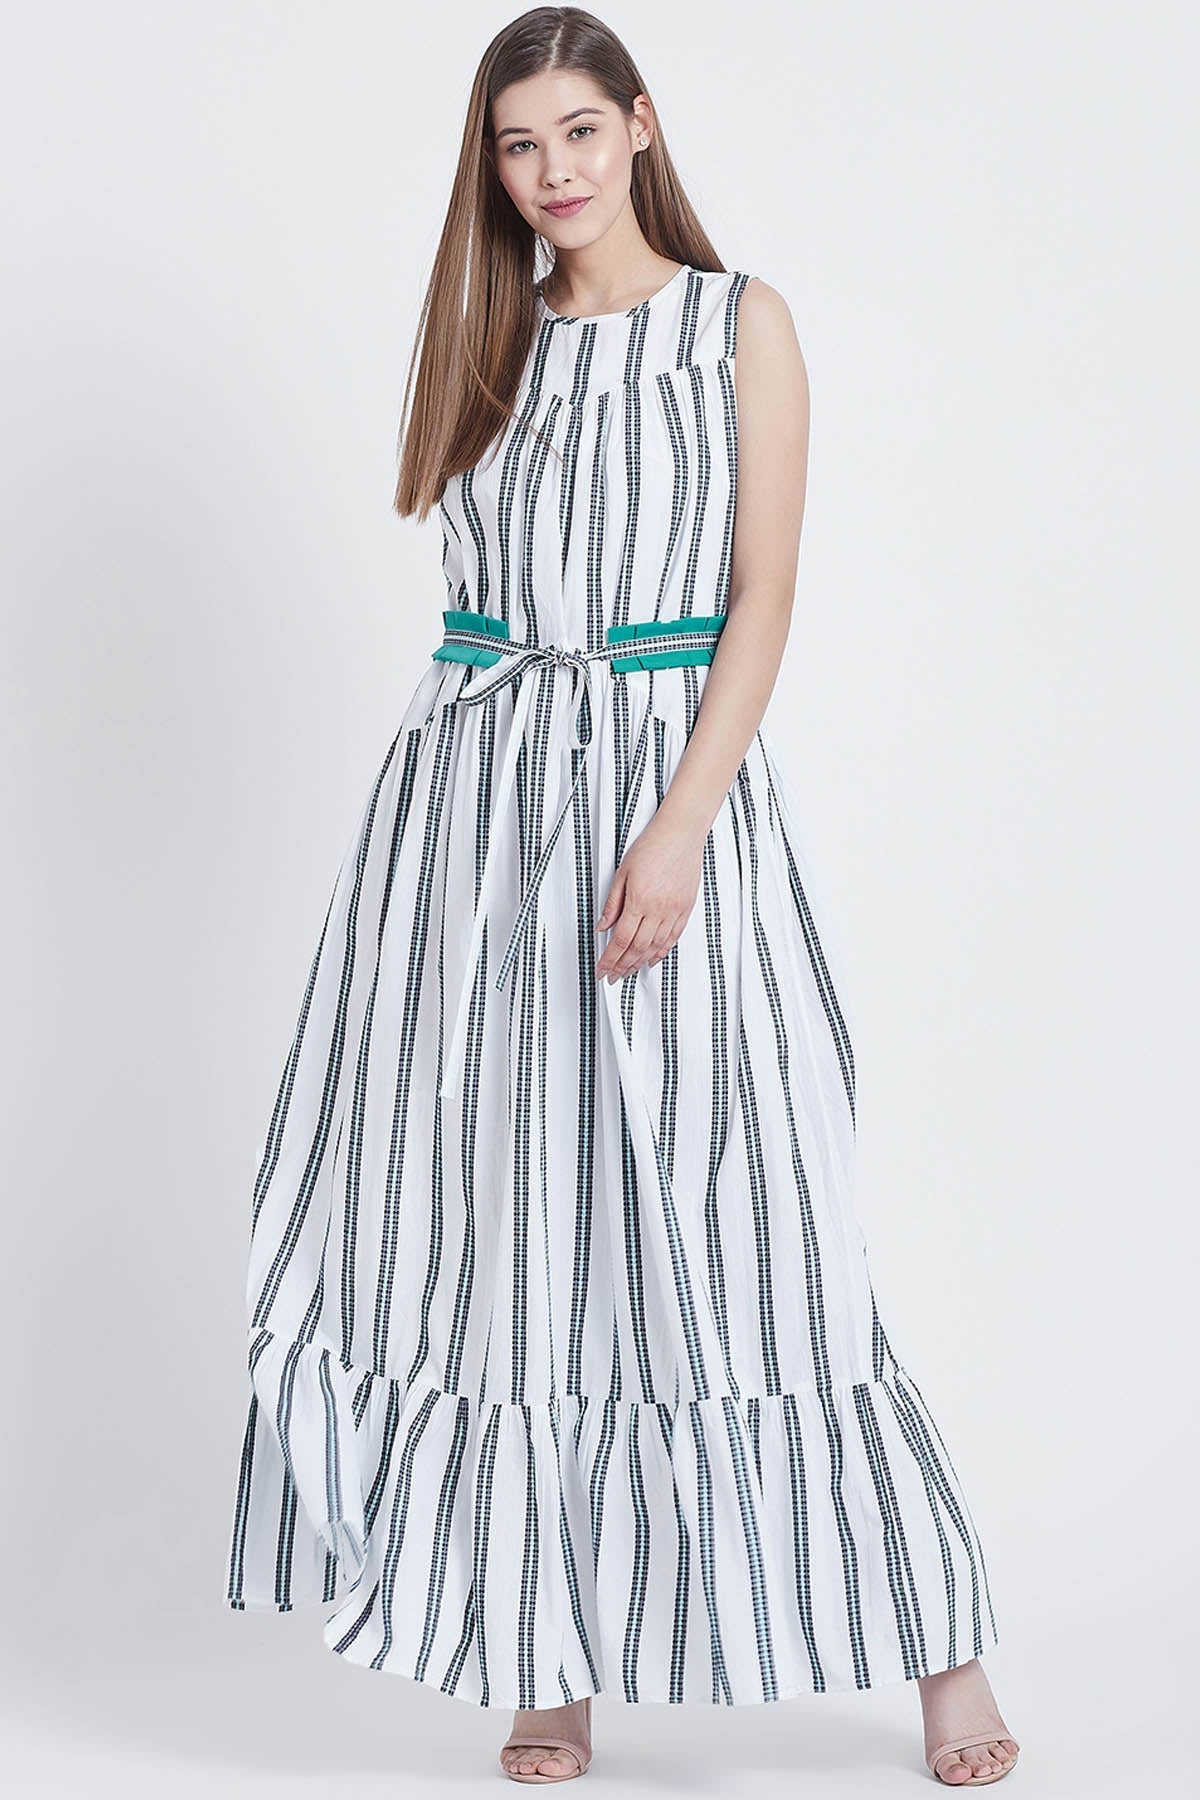 Bohobi White Cotton Striped Dress For Women Online at ScrollnShops